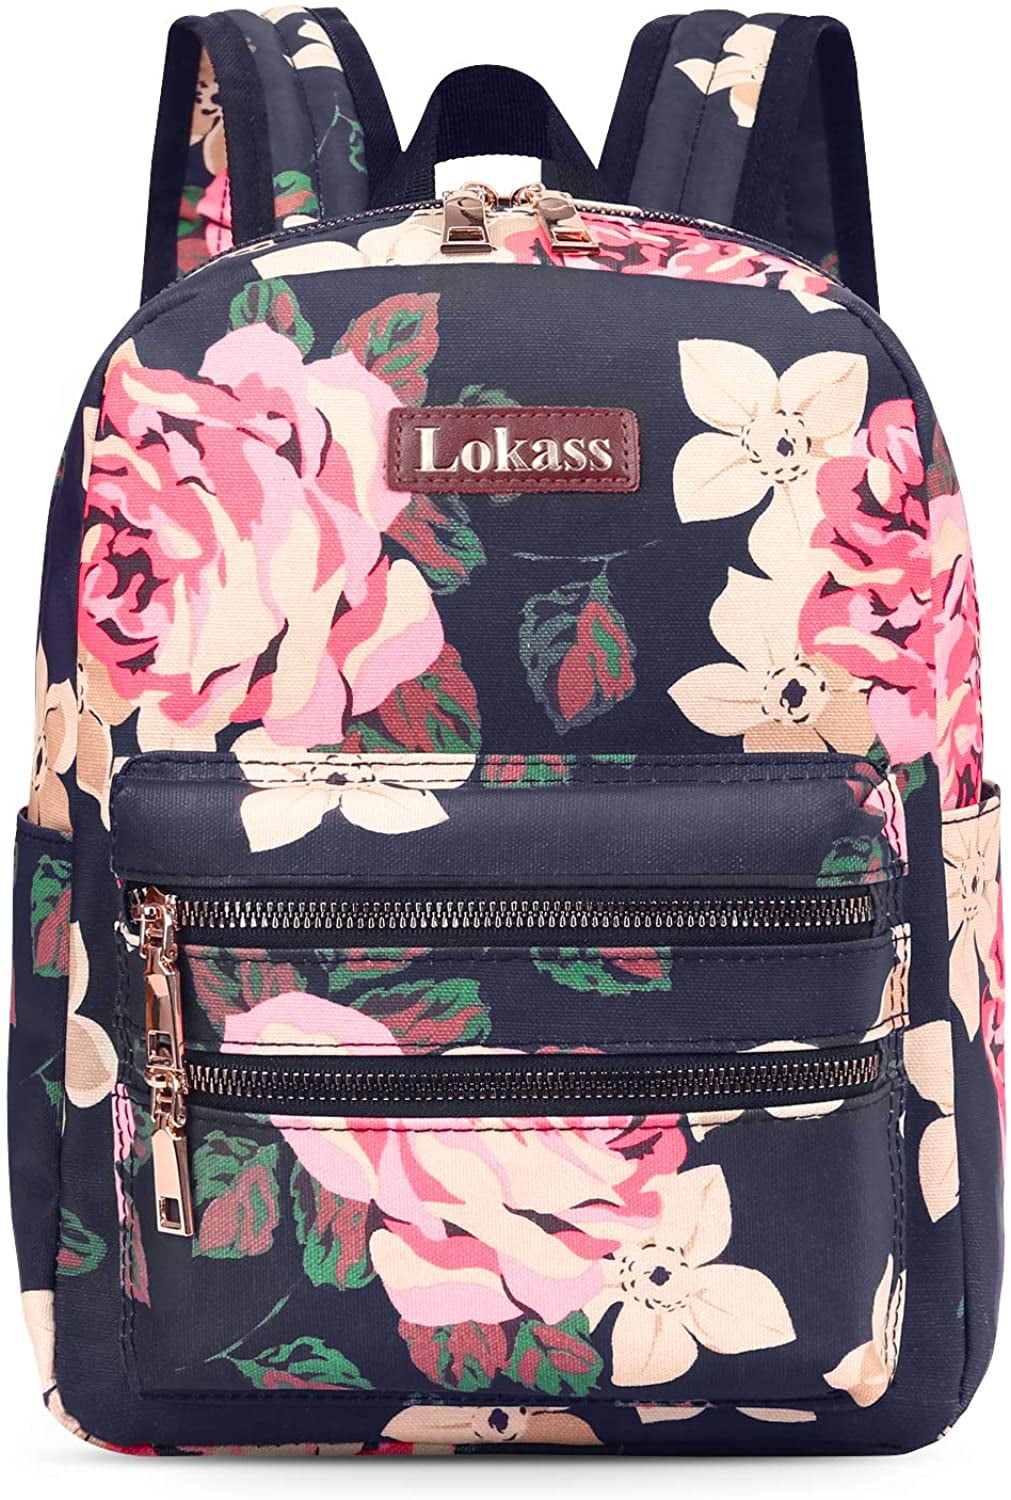 Dinosaur Casual Travel Daypack School Backpack for Women Large Diaper Bag Rucksack Bookbag for College Fits 15inch Laptop Backpack